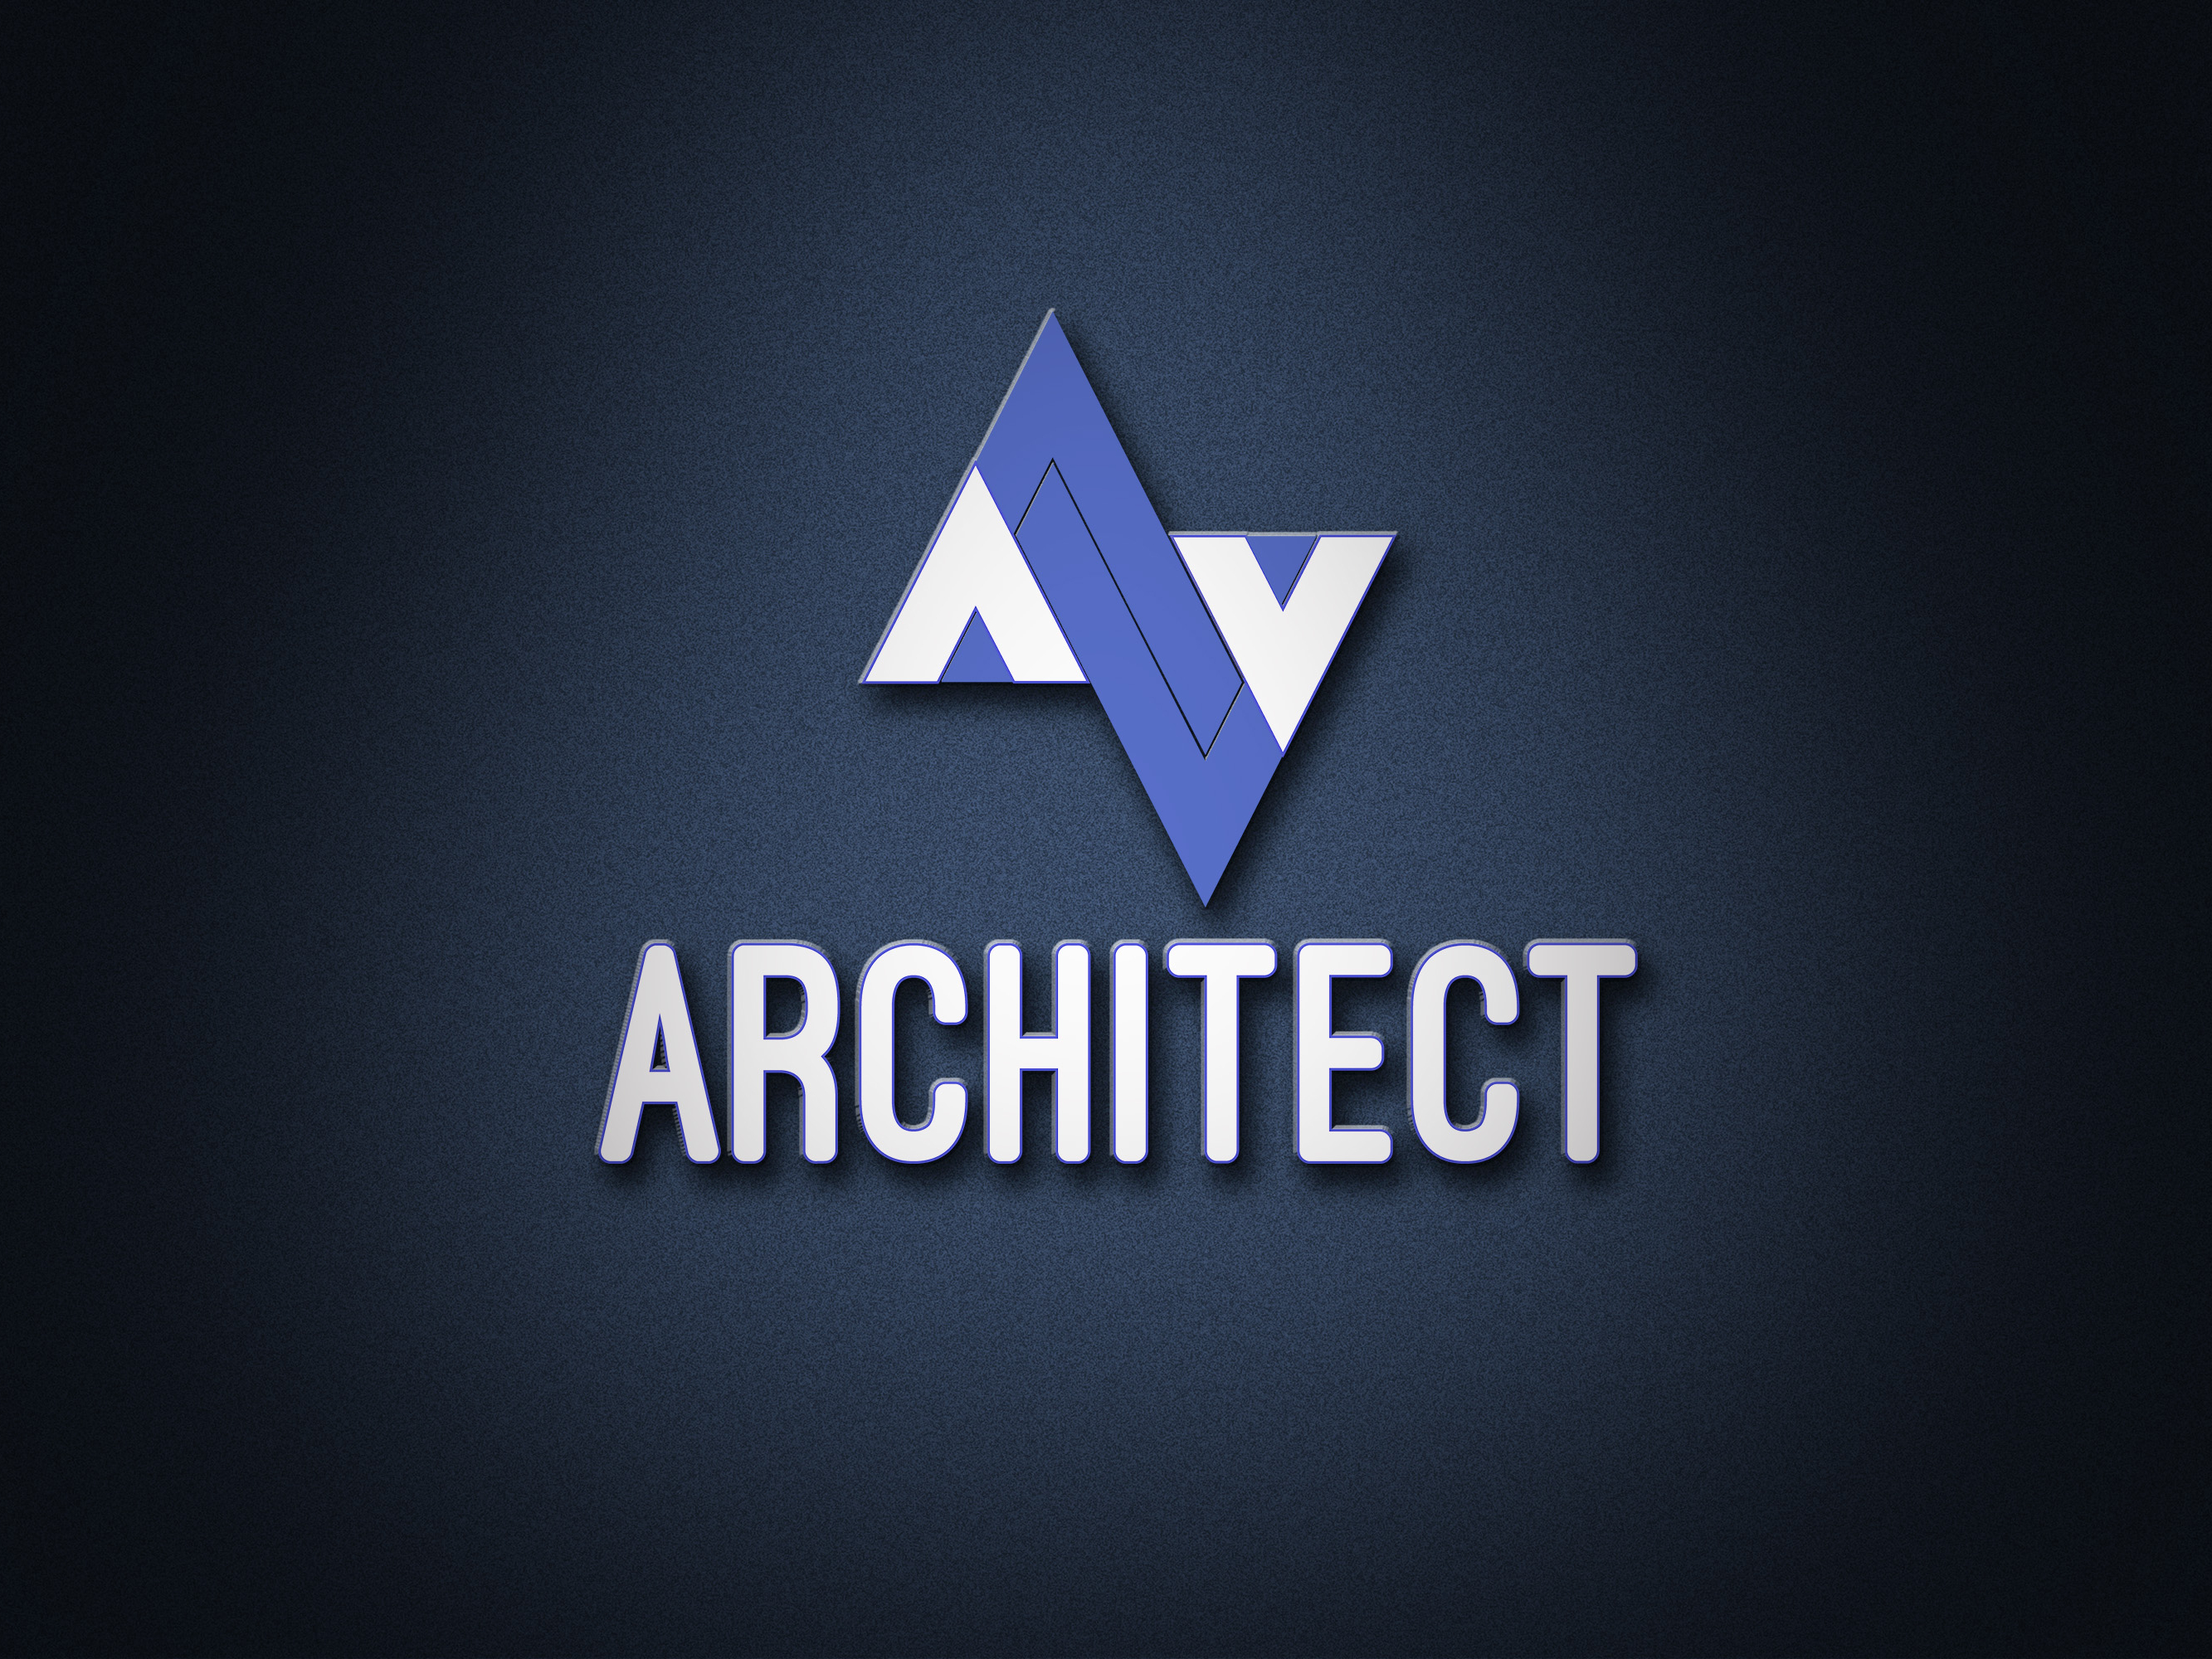 Architect Logo design by Abul hasan nobin on Dribbble